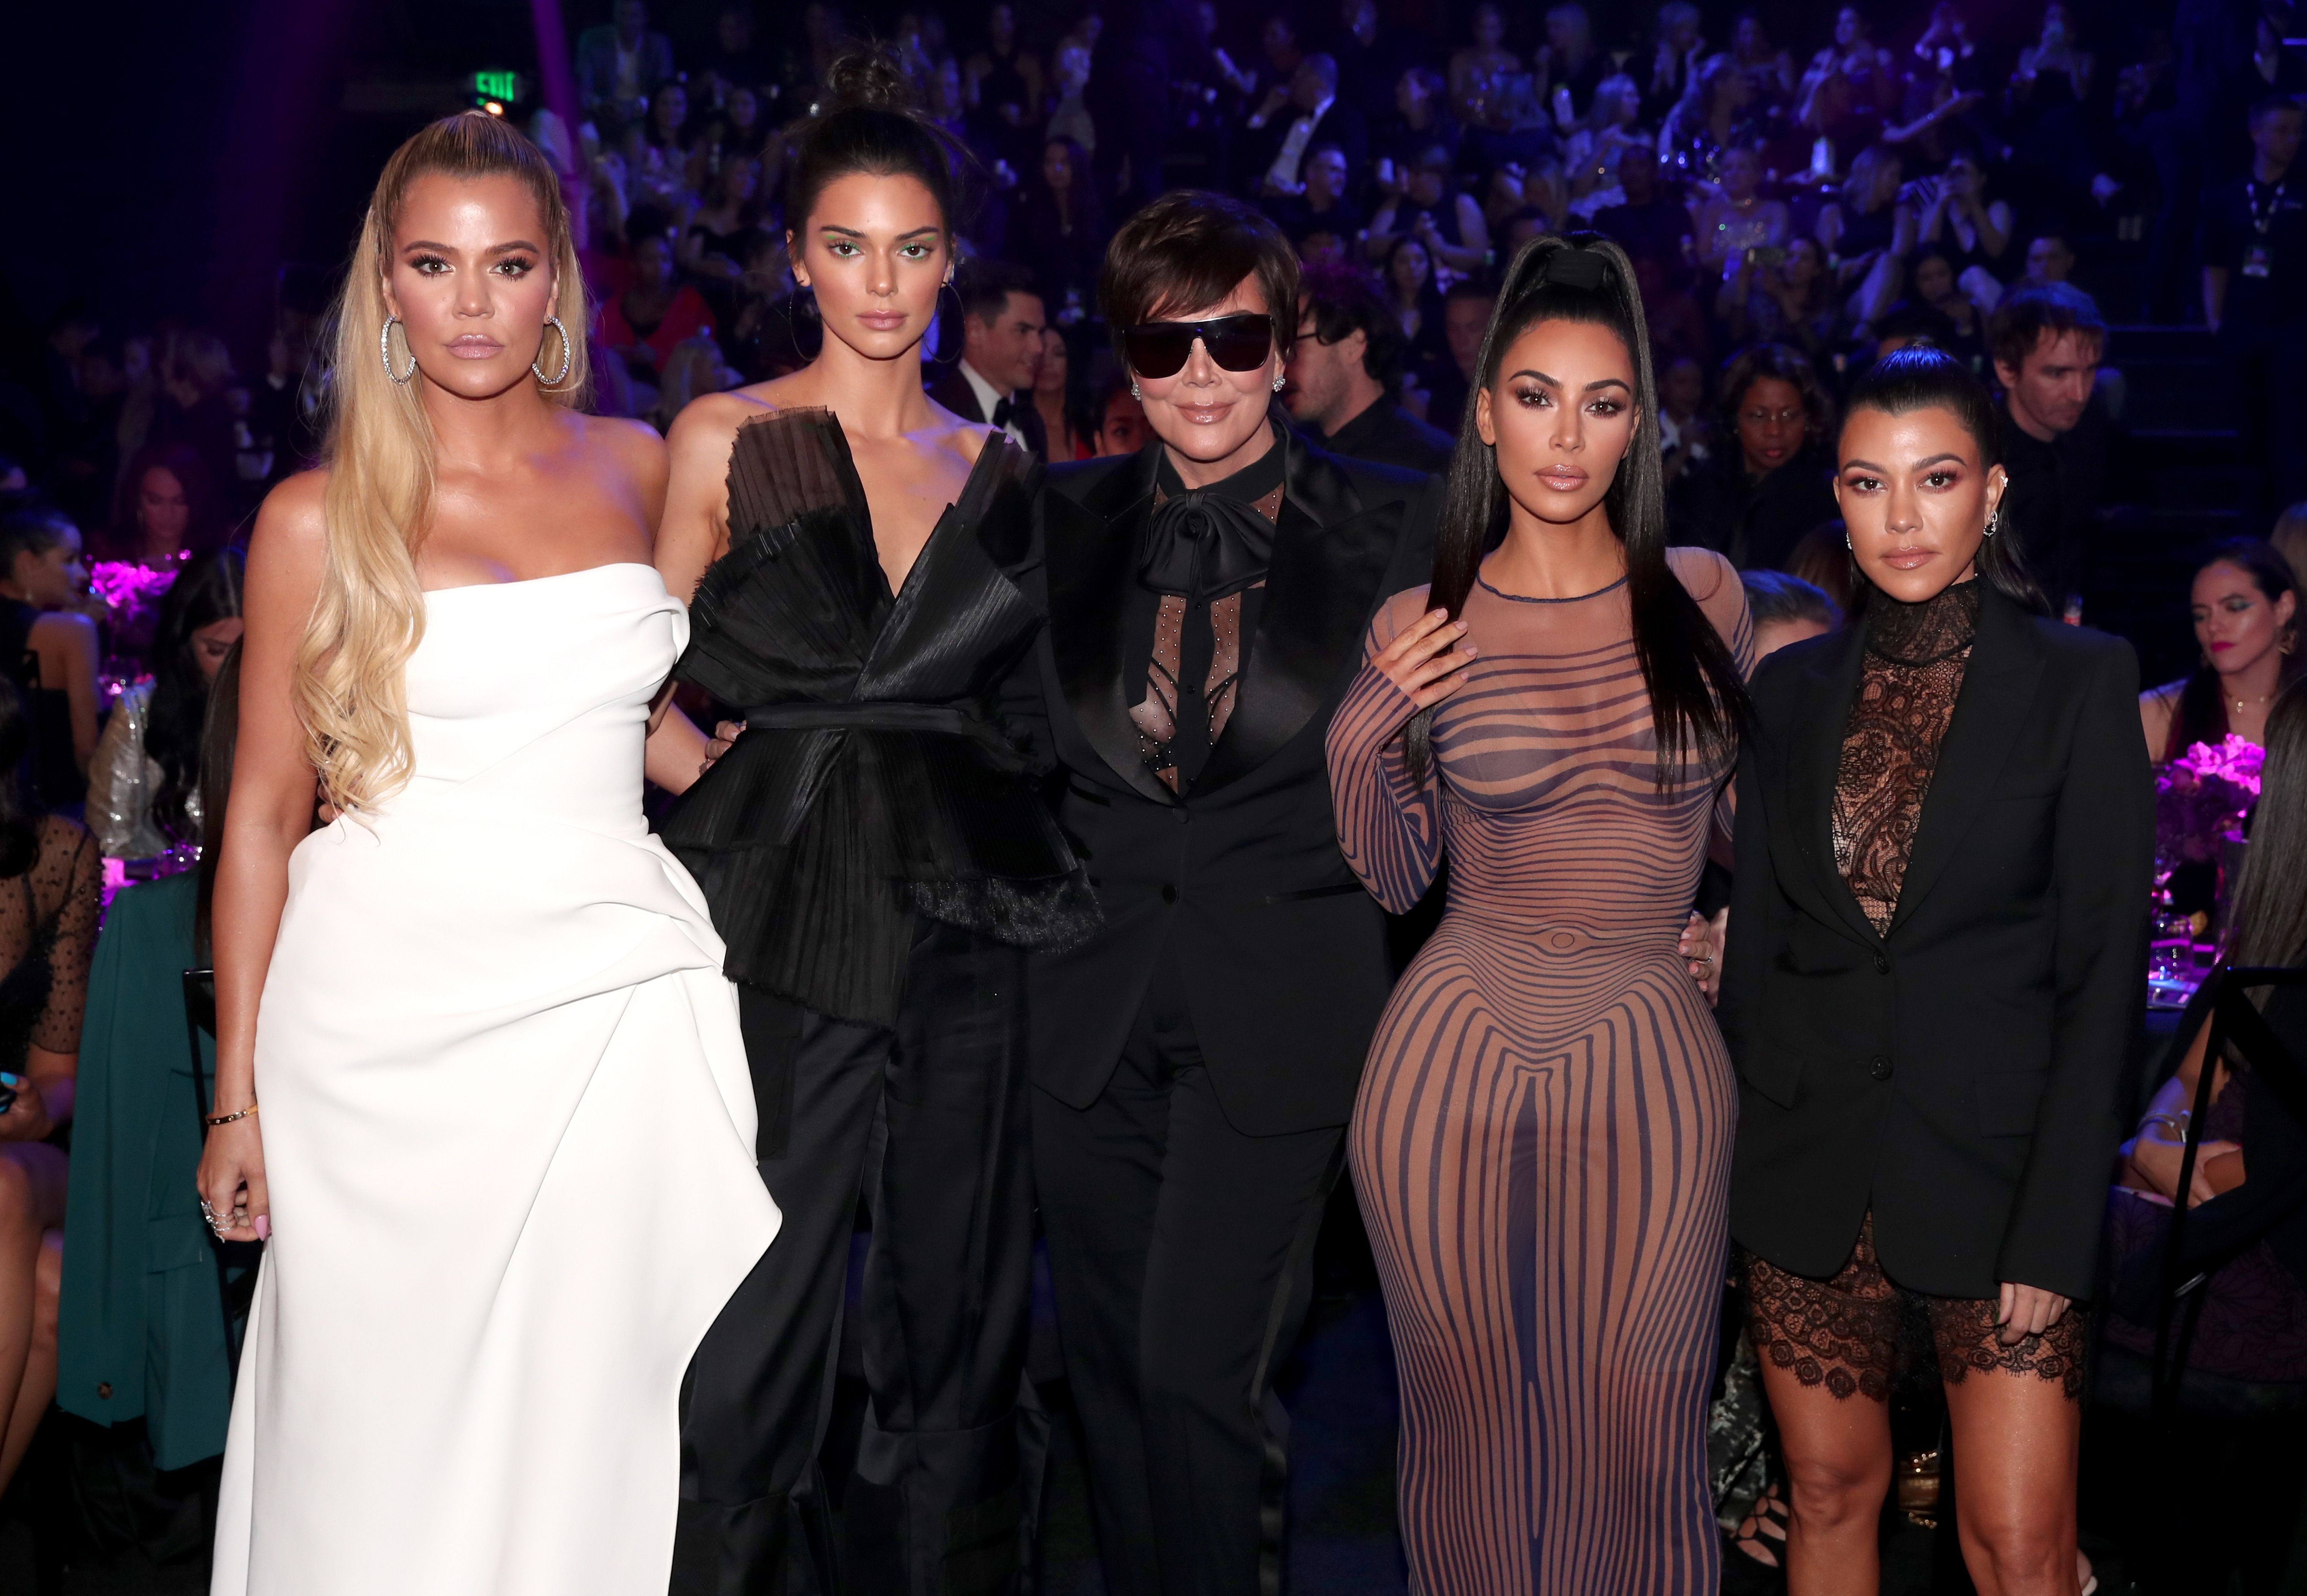 Khloe Kardashian, Kendall Jenner, Kris Jenner, Kim Kardashian and Kourtney Kardashian at the 2018 E! People's Choice Awards | Source: Getty Images